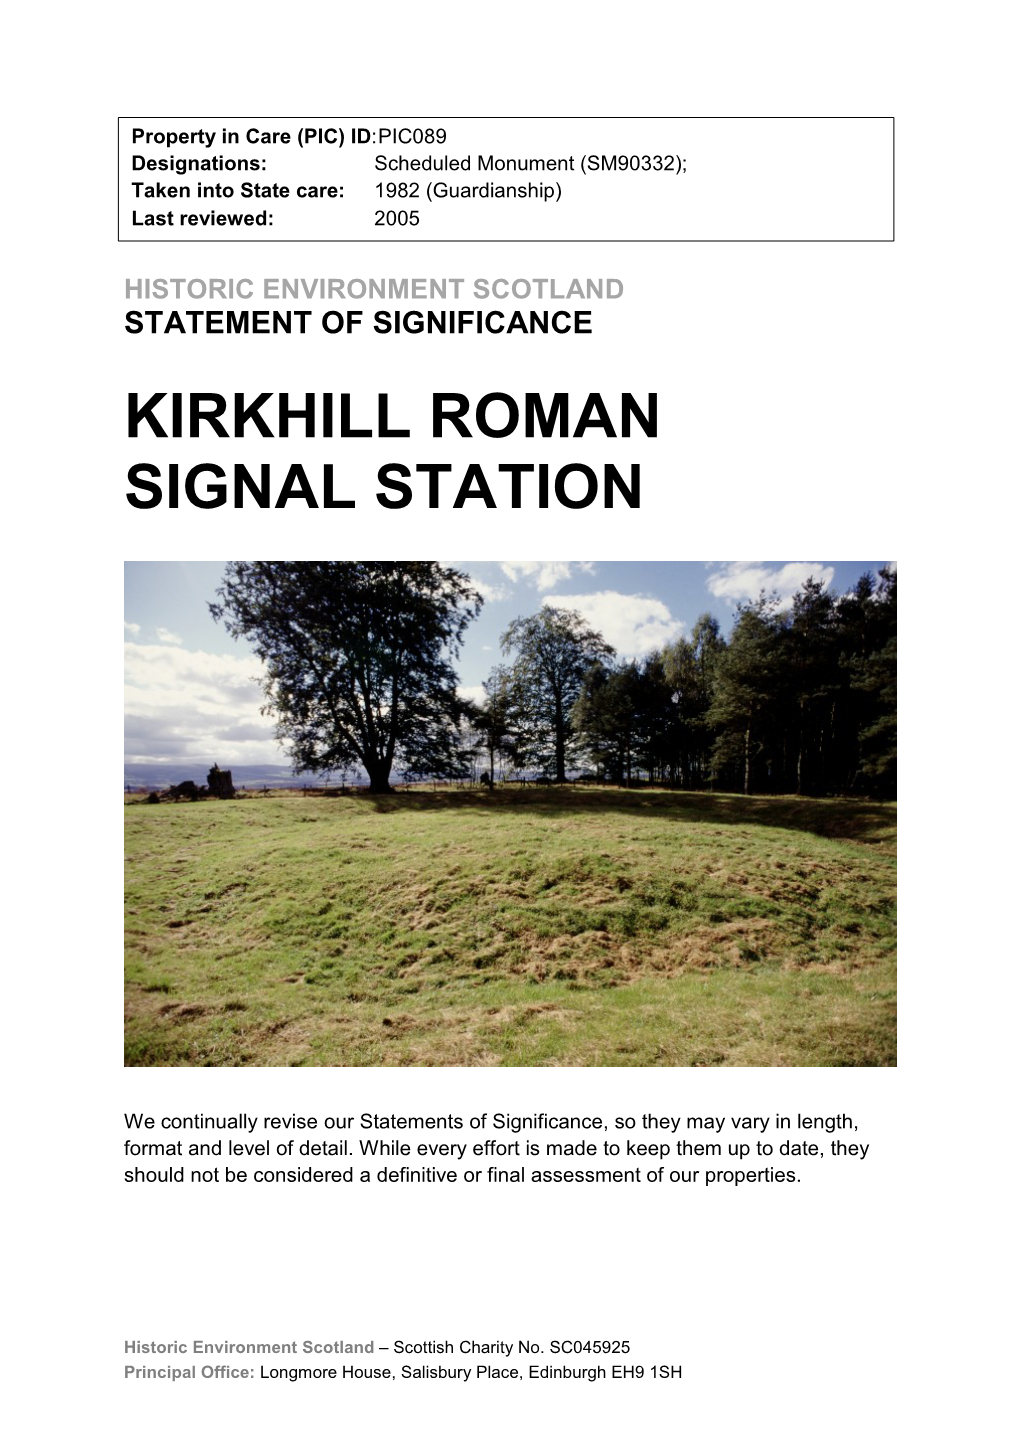 Kirkhill Roman Signal Station